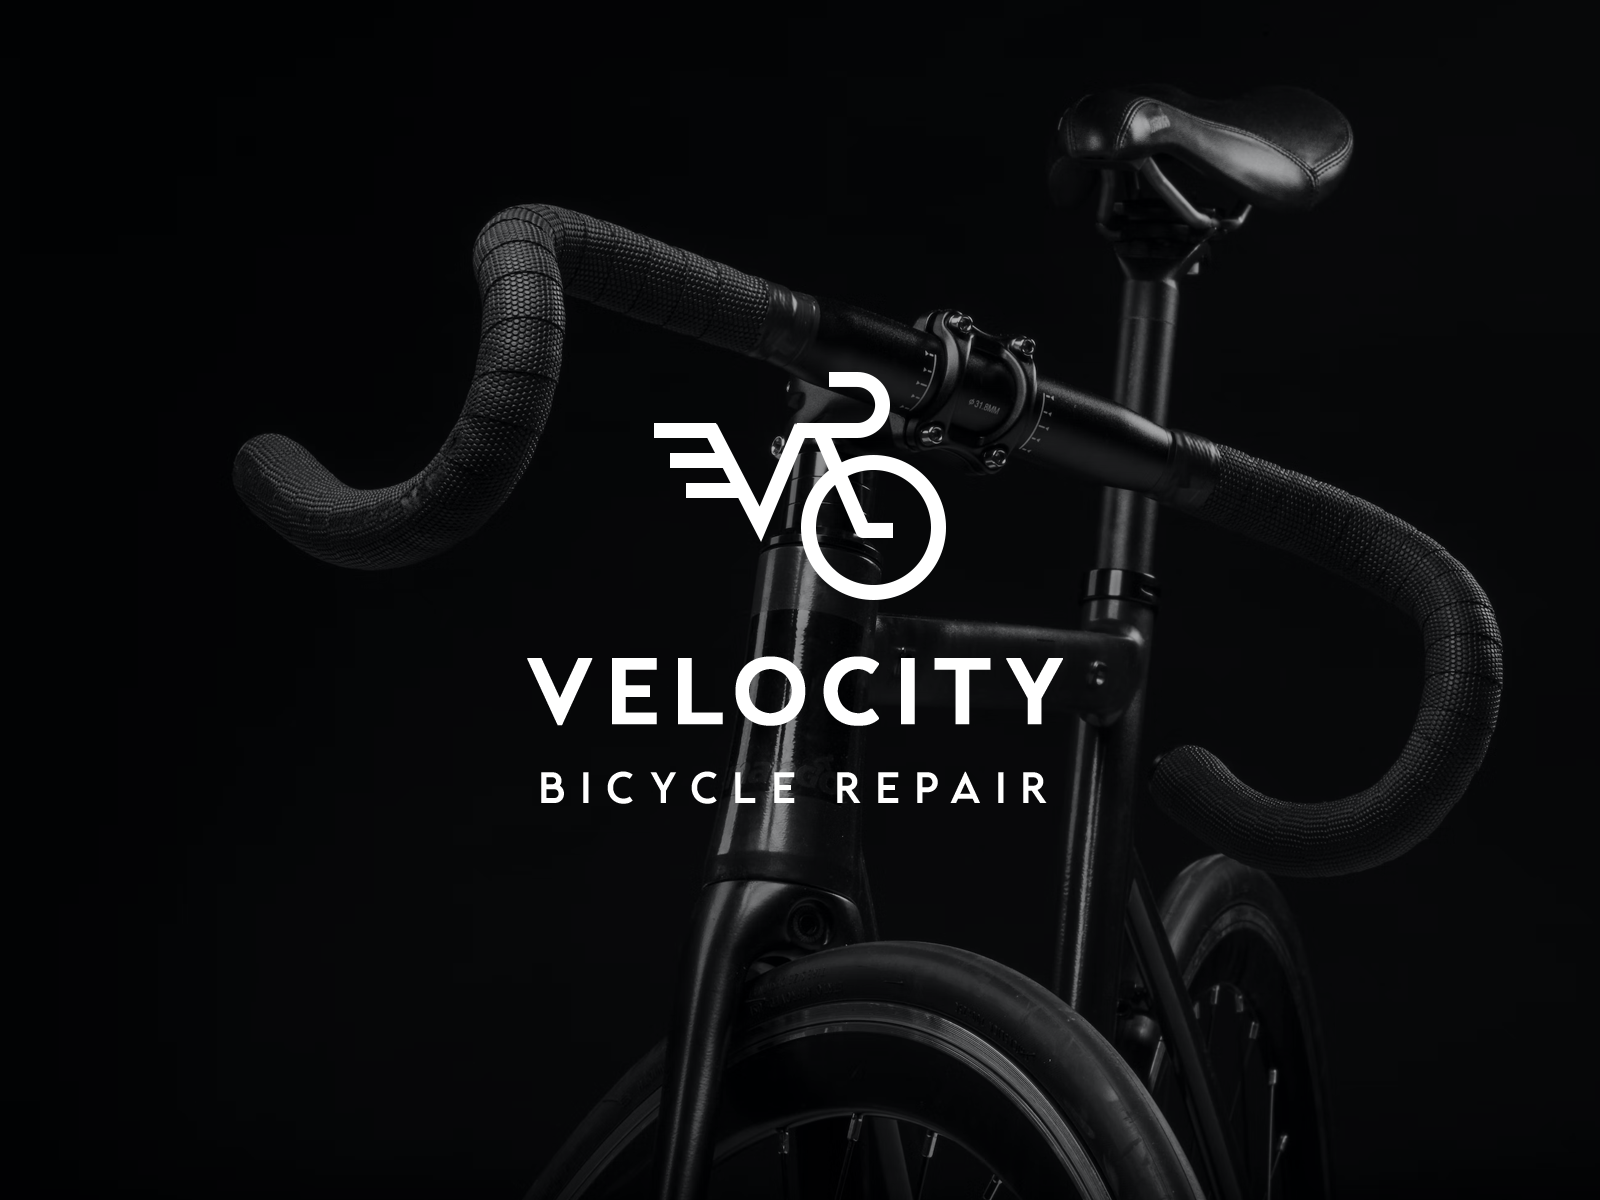 Logo Velocity by Karina Tkachova on Dribbble